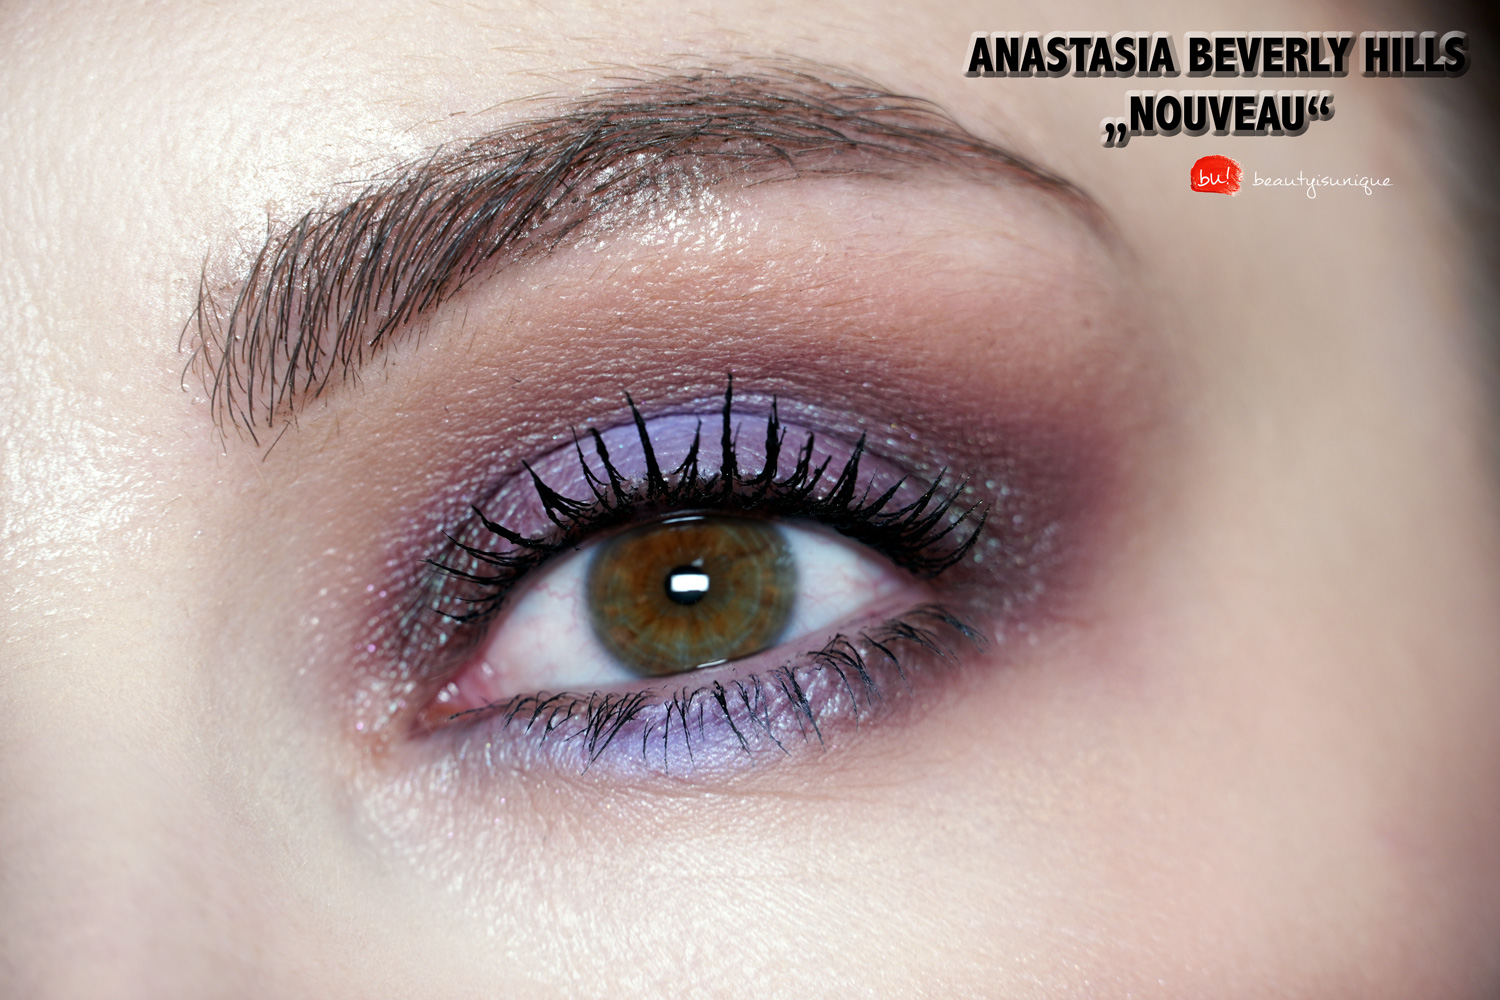 Anastasia-beverly-hills-nouveau-palette